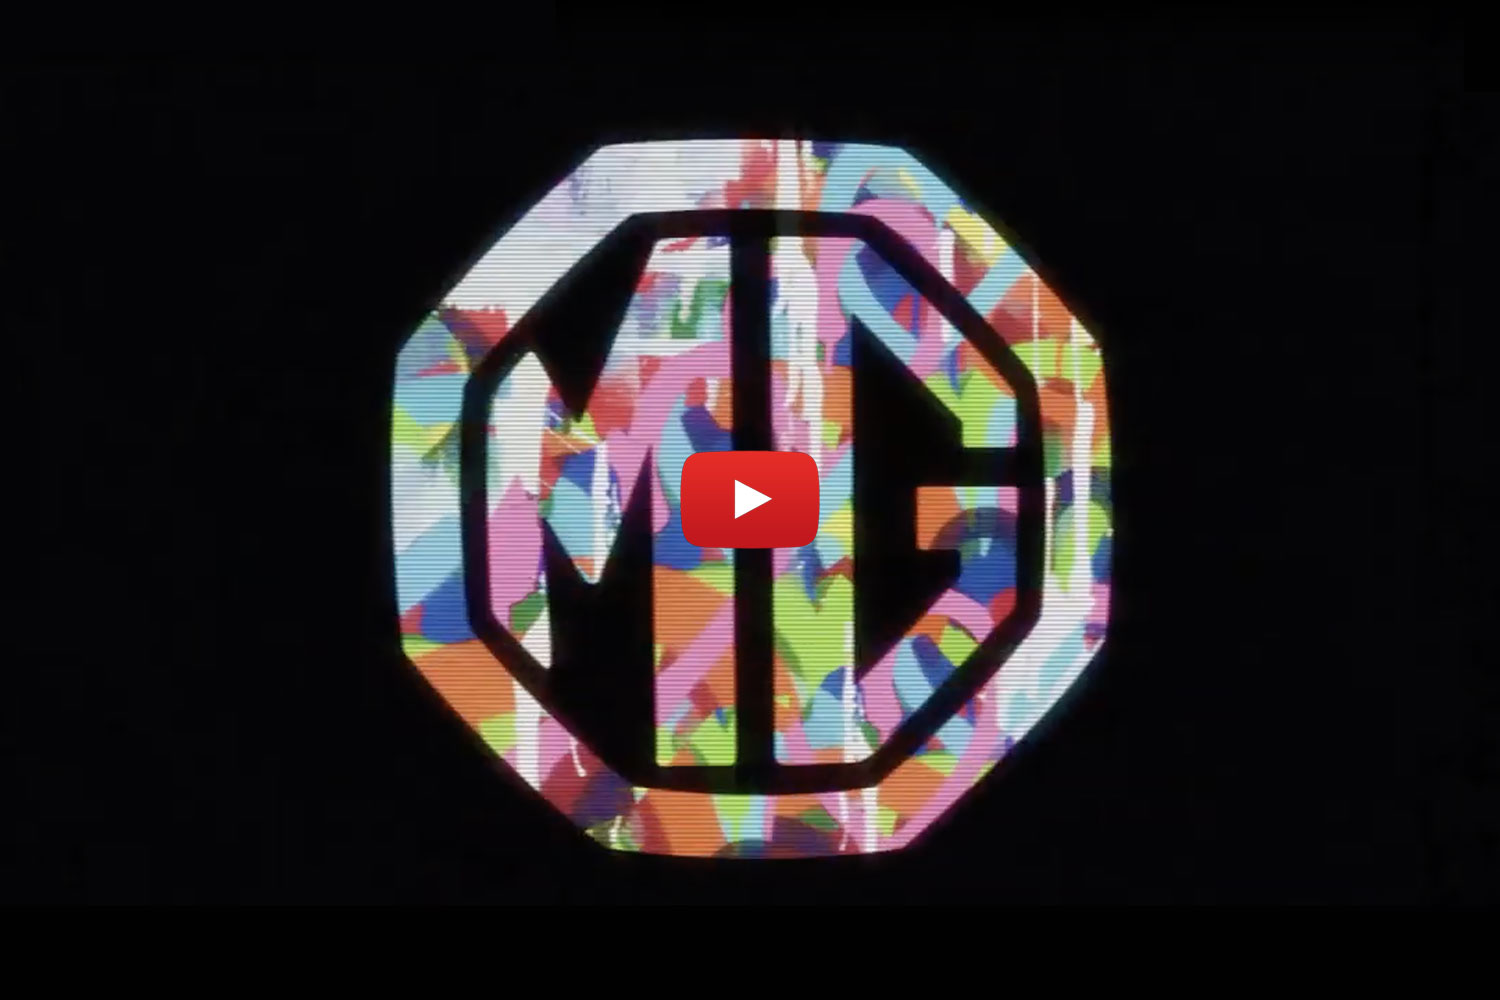 Watch the MG Art Car reveal video